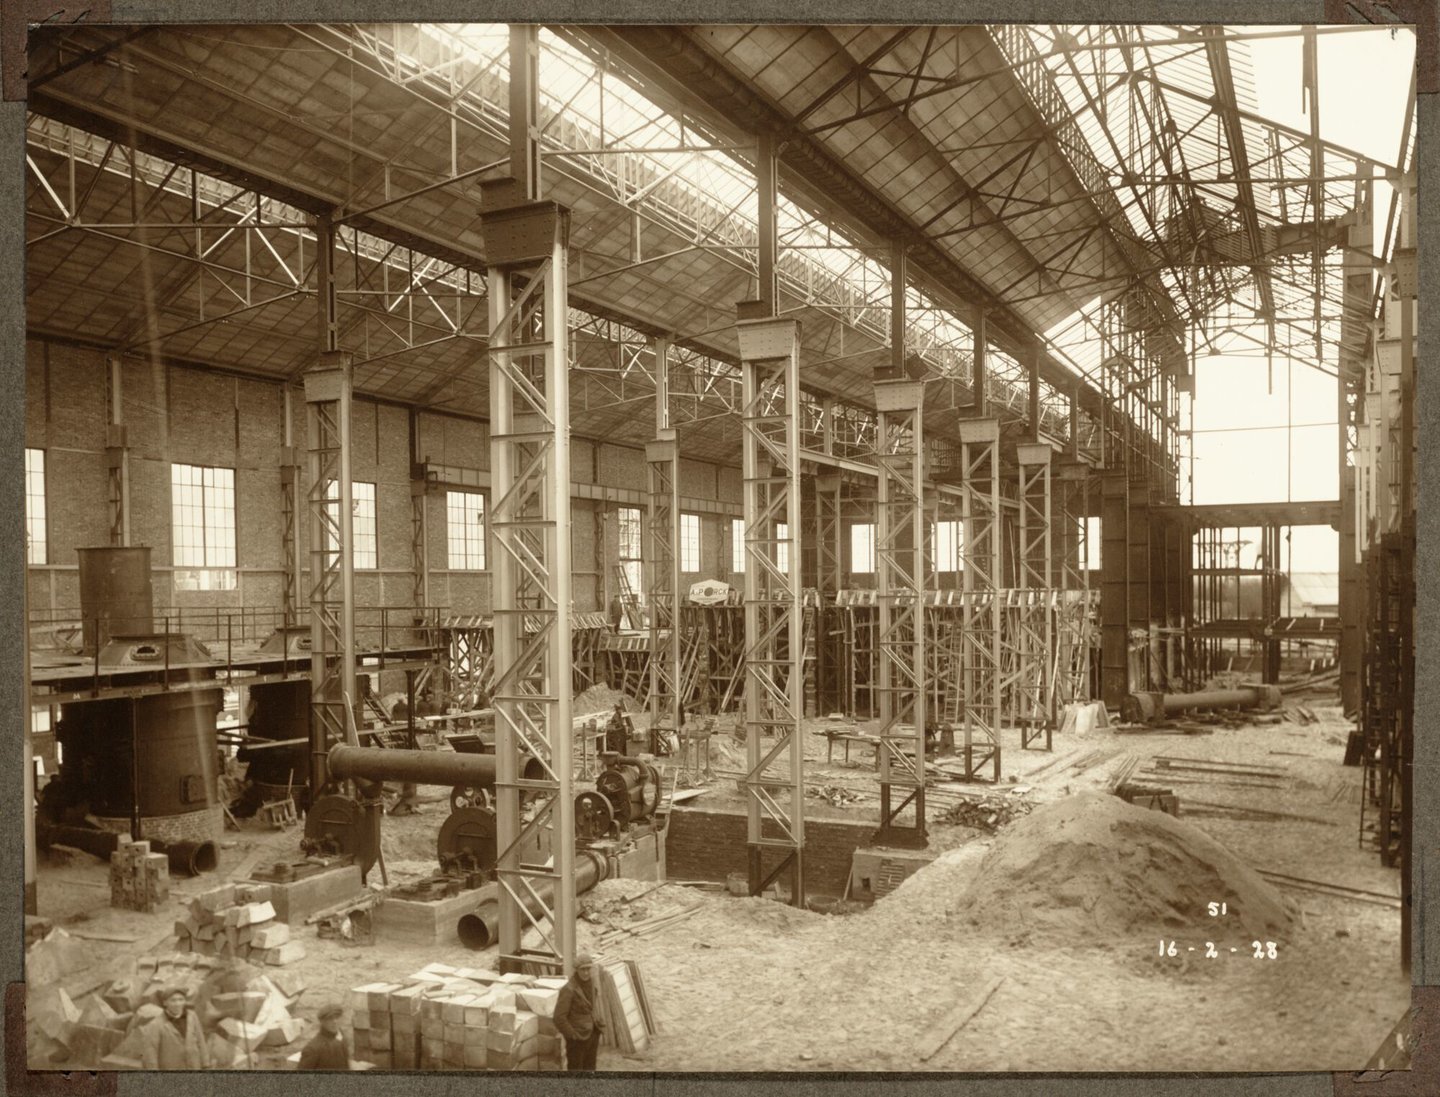 Bouw van ammoniakfabriek van cokesfabriek Kuhlmann in Zelzate